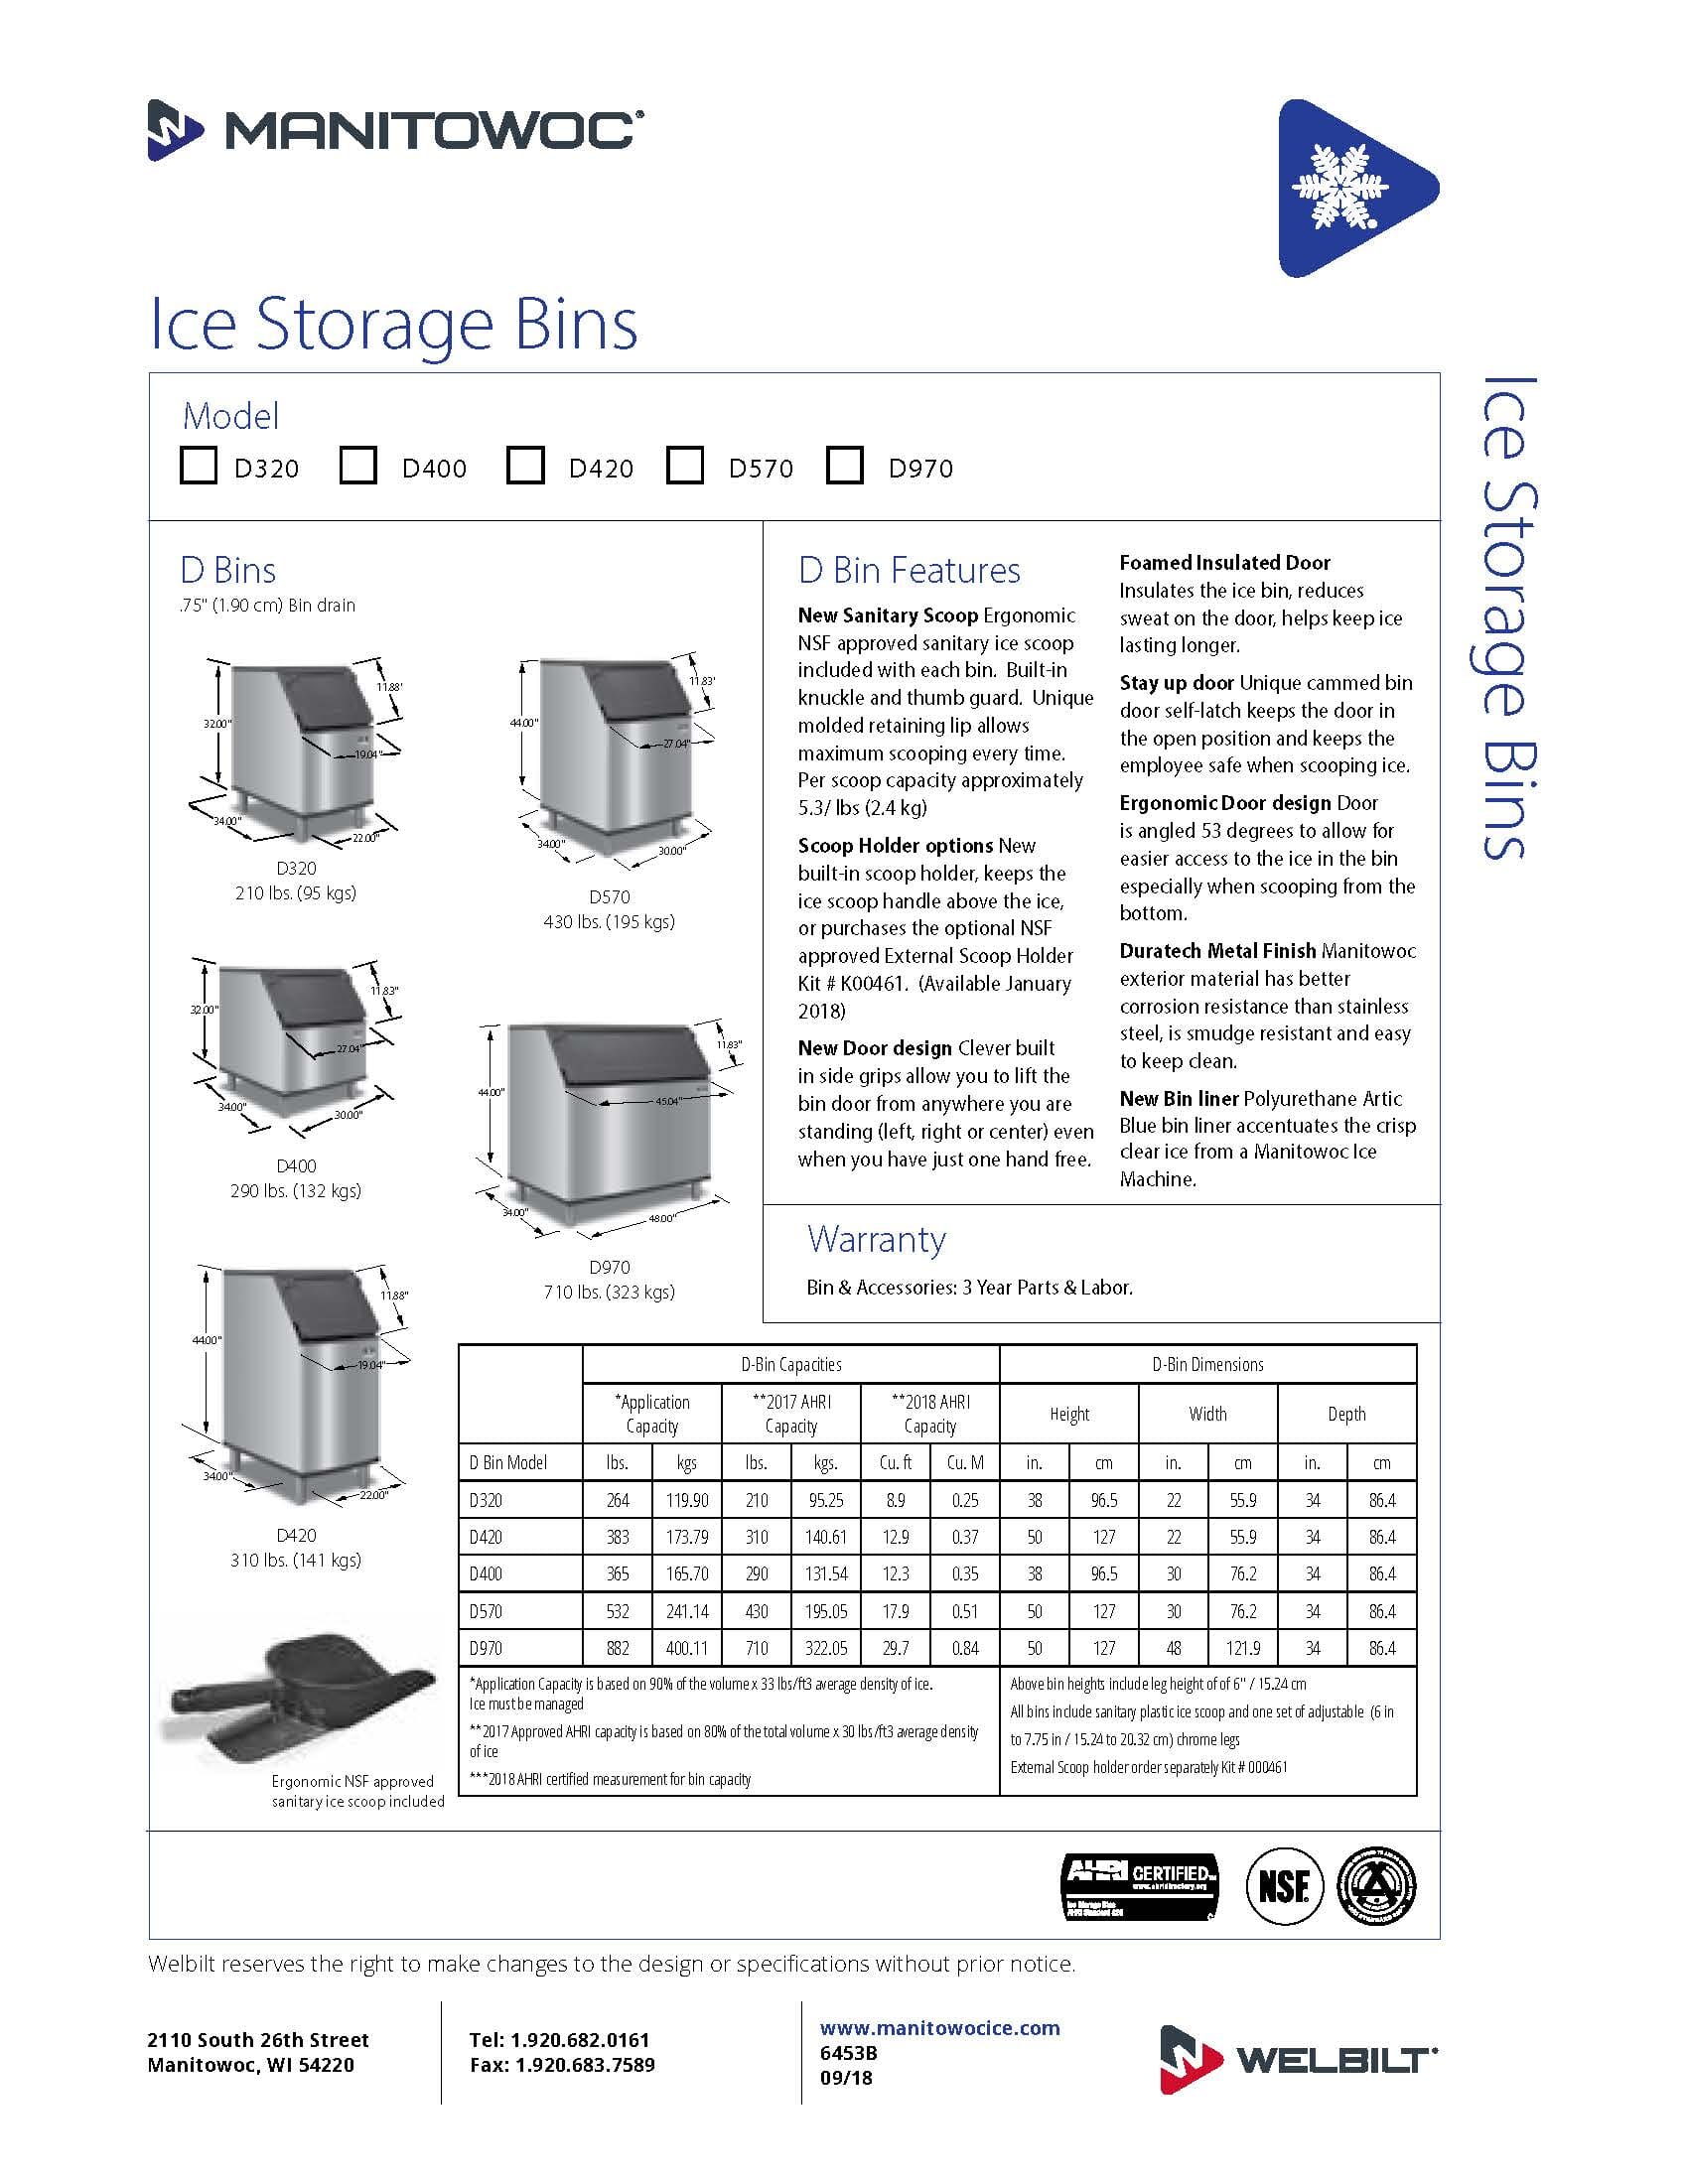 Manitowoc D570 532 LB Capacity 30 Wide Ice Storage Bin